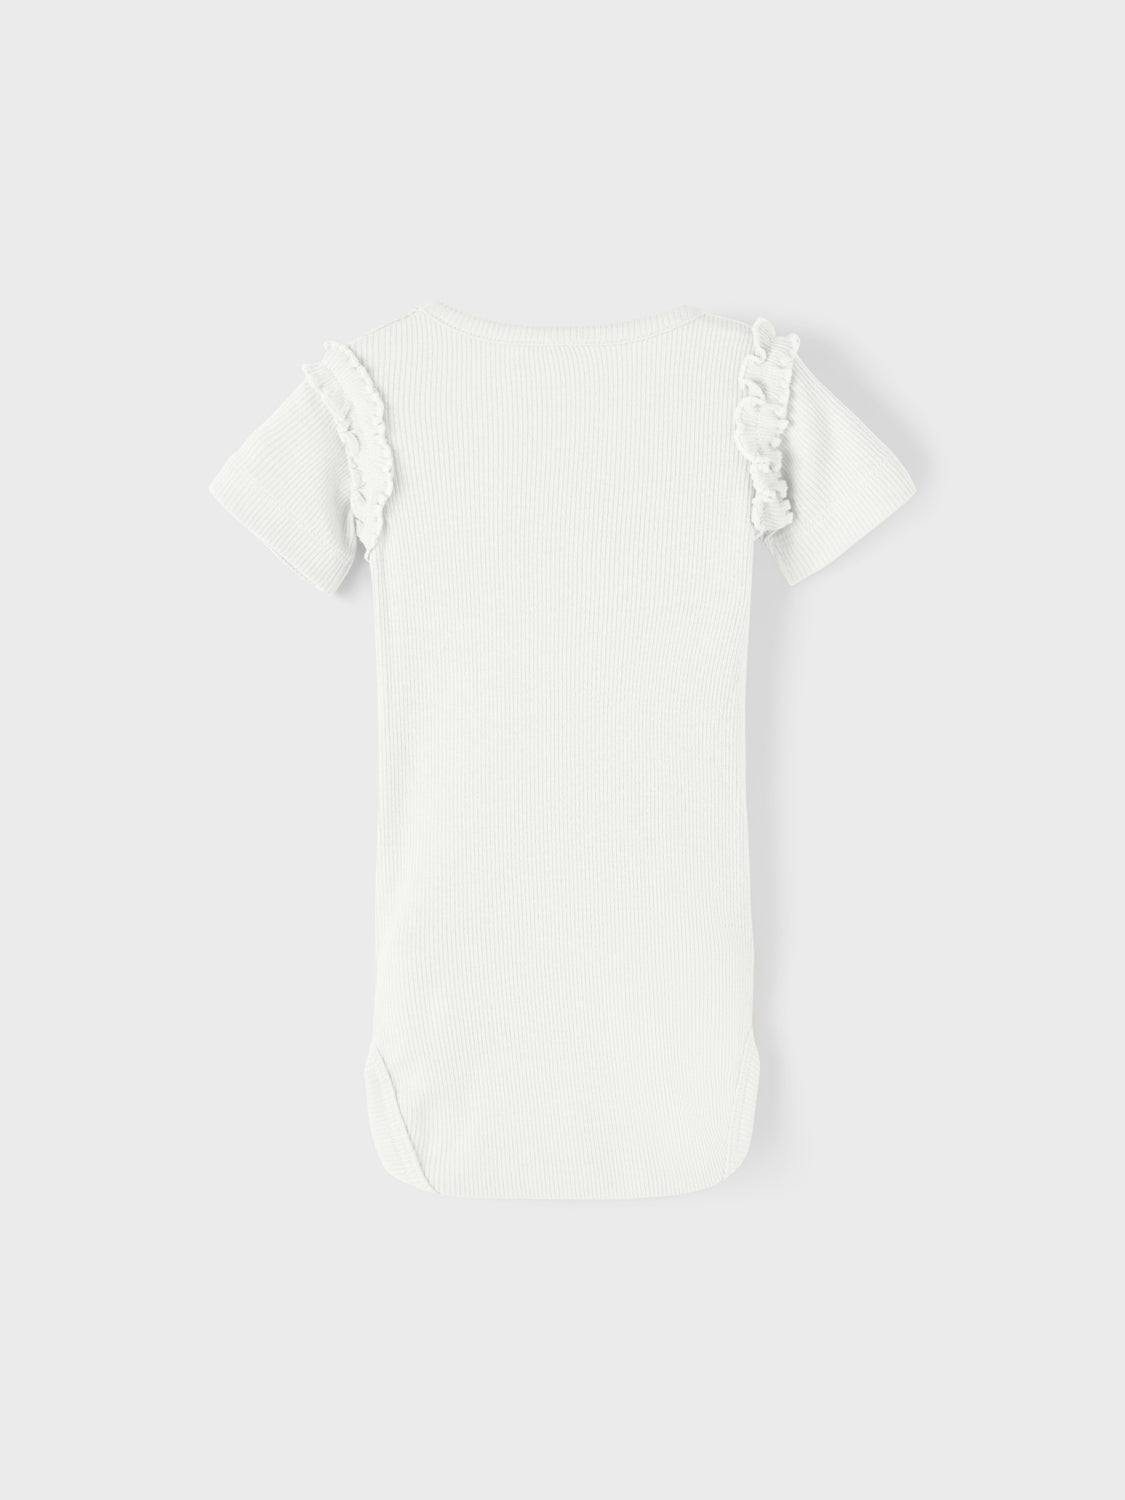 NBFJINNA T-Shirts & Tops - Bright White